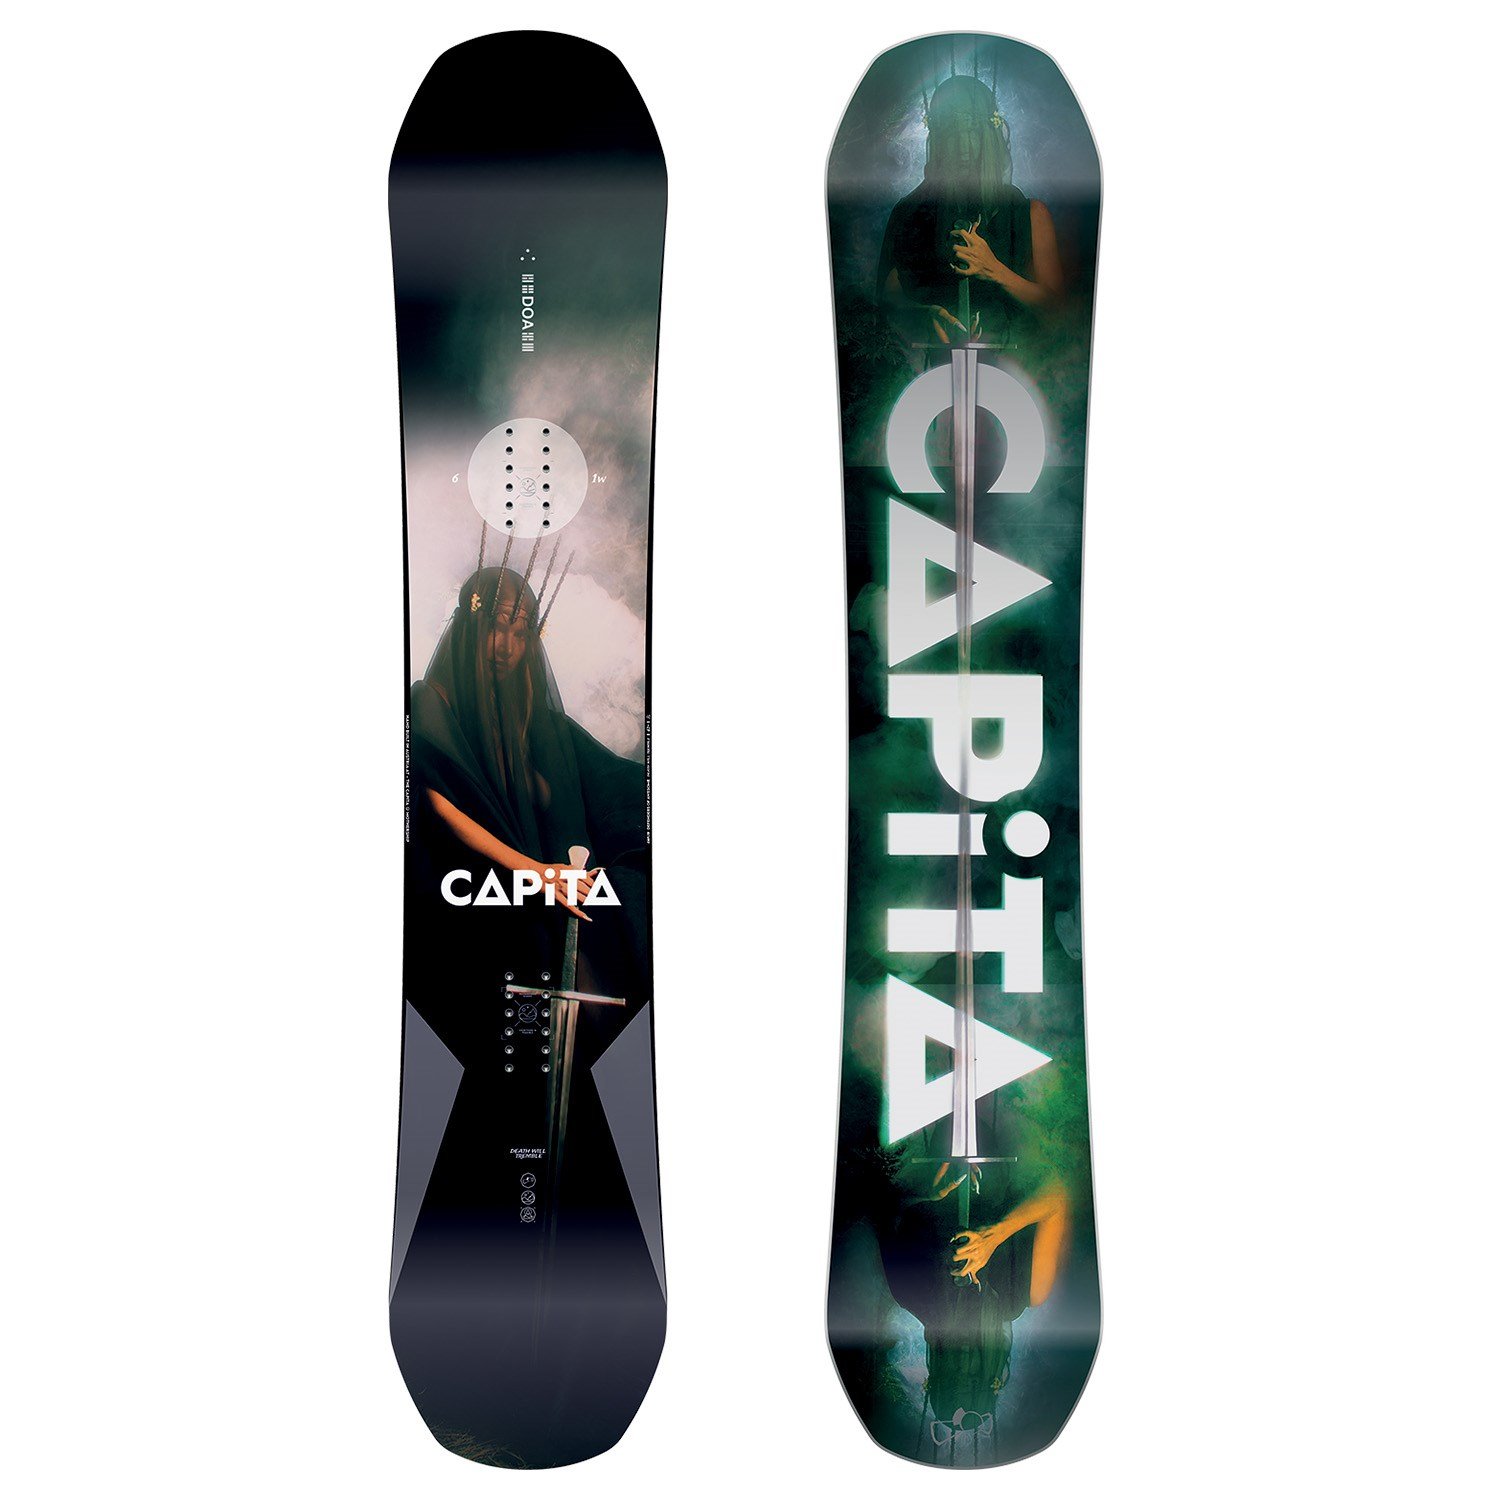 CAPiTA Defenders of Snowboard 2019 | evo